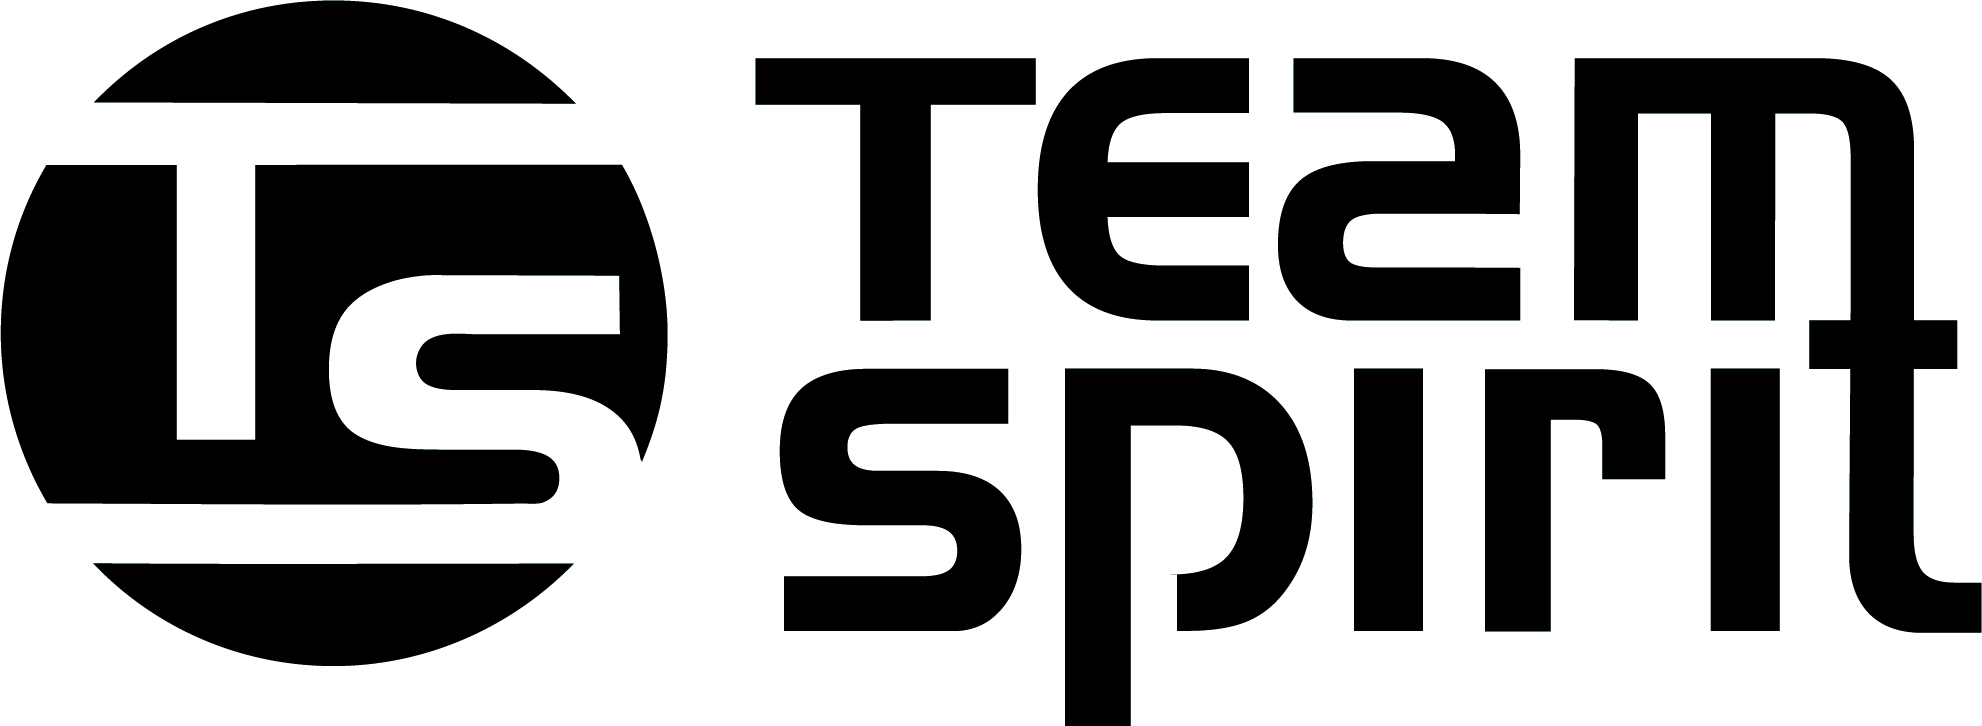 Team Spirit logo